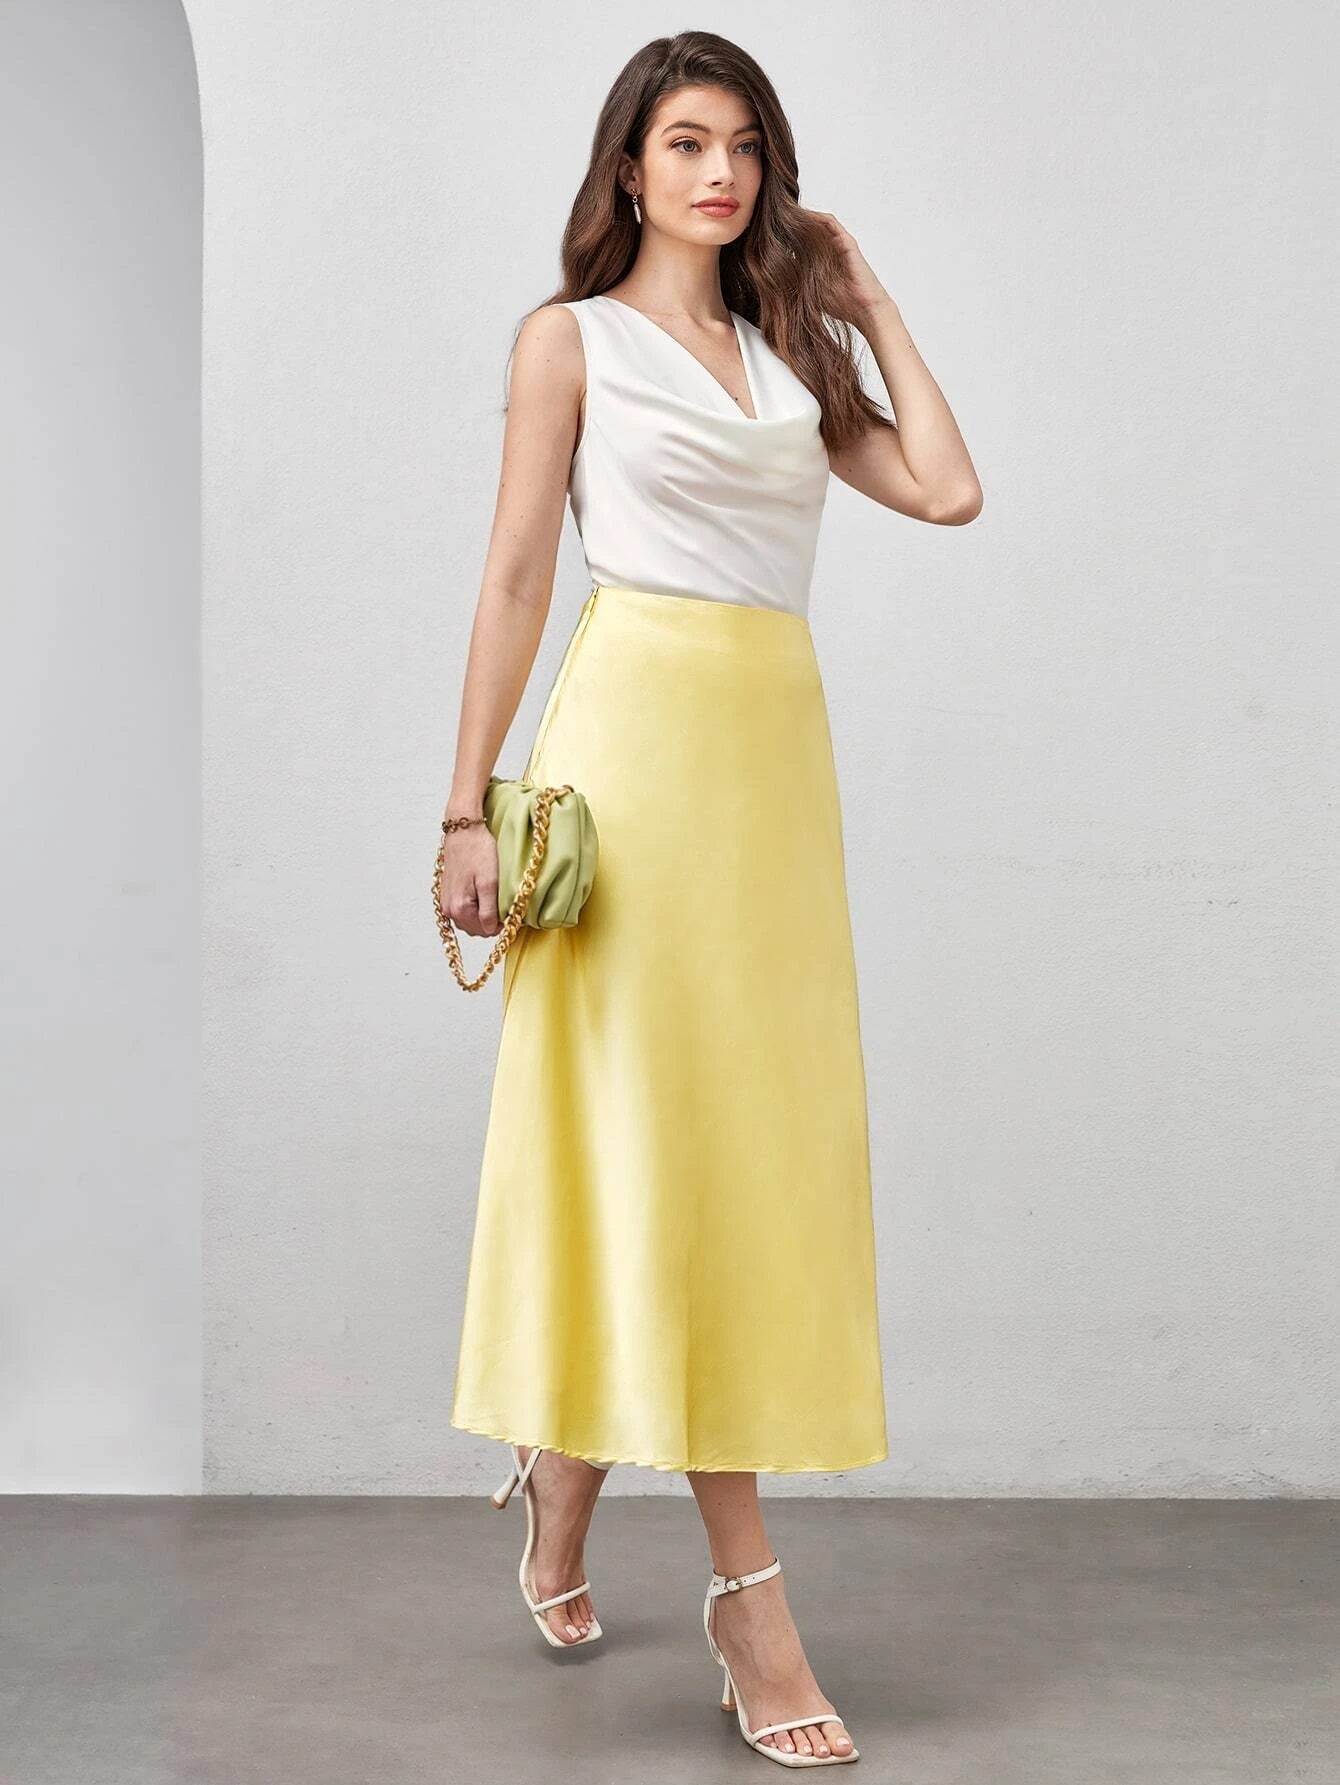 CM-BS729985 Women Elegant Seoul Style High Waist Solid Satin A-Line Skirt - Yellow